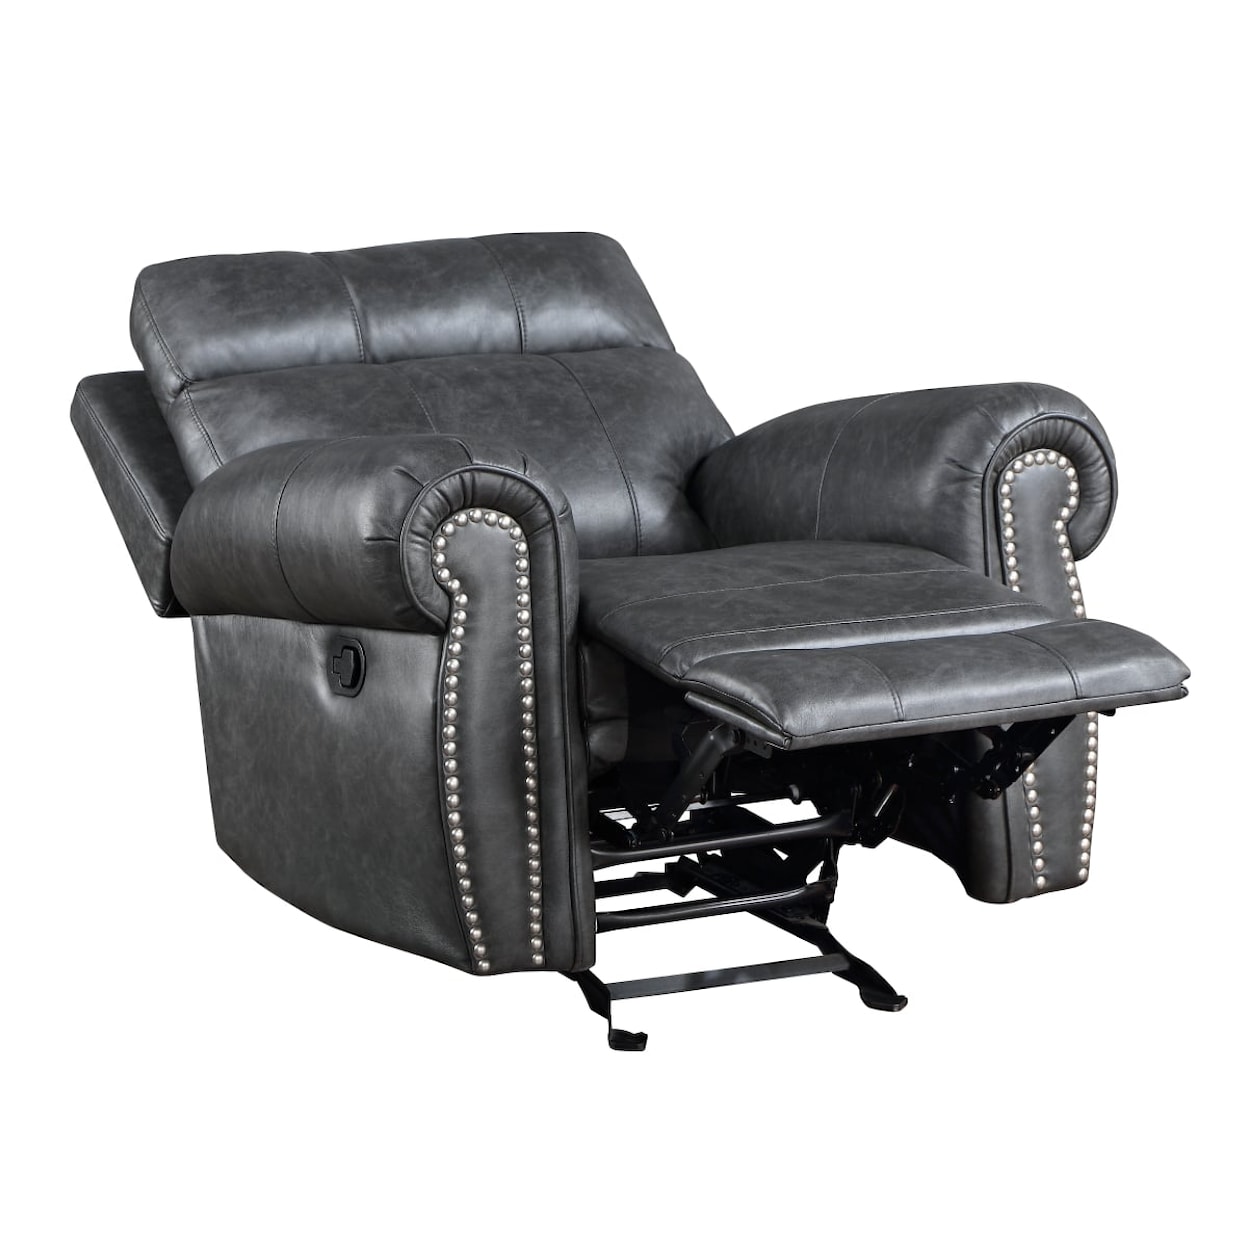 Homelegance Granville Glider Reclining Chair